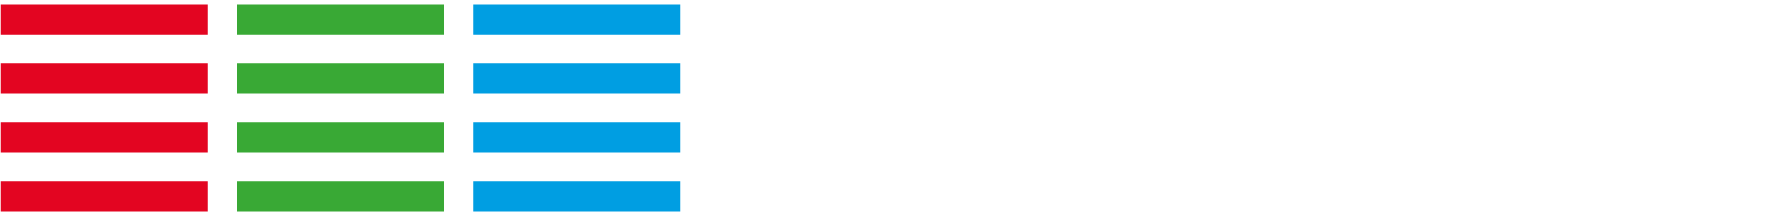 acs medientechnik GmbH